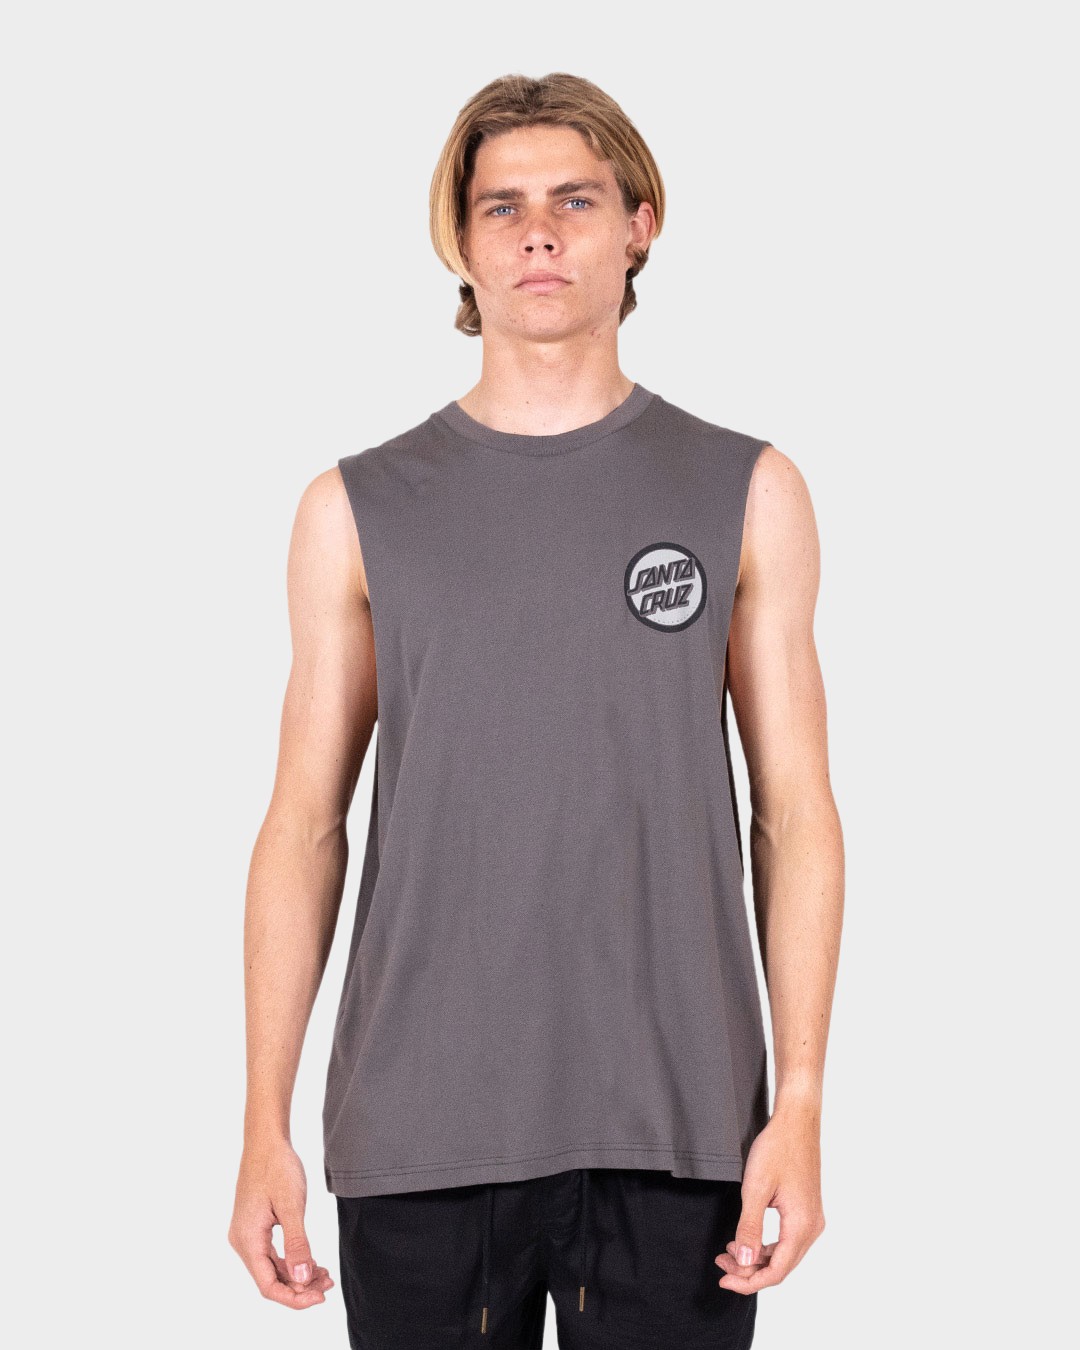 Handled Santa Cruz Men's Muscle T-shirt - Charcoal